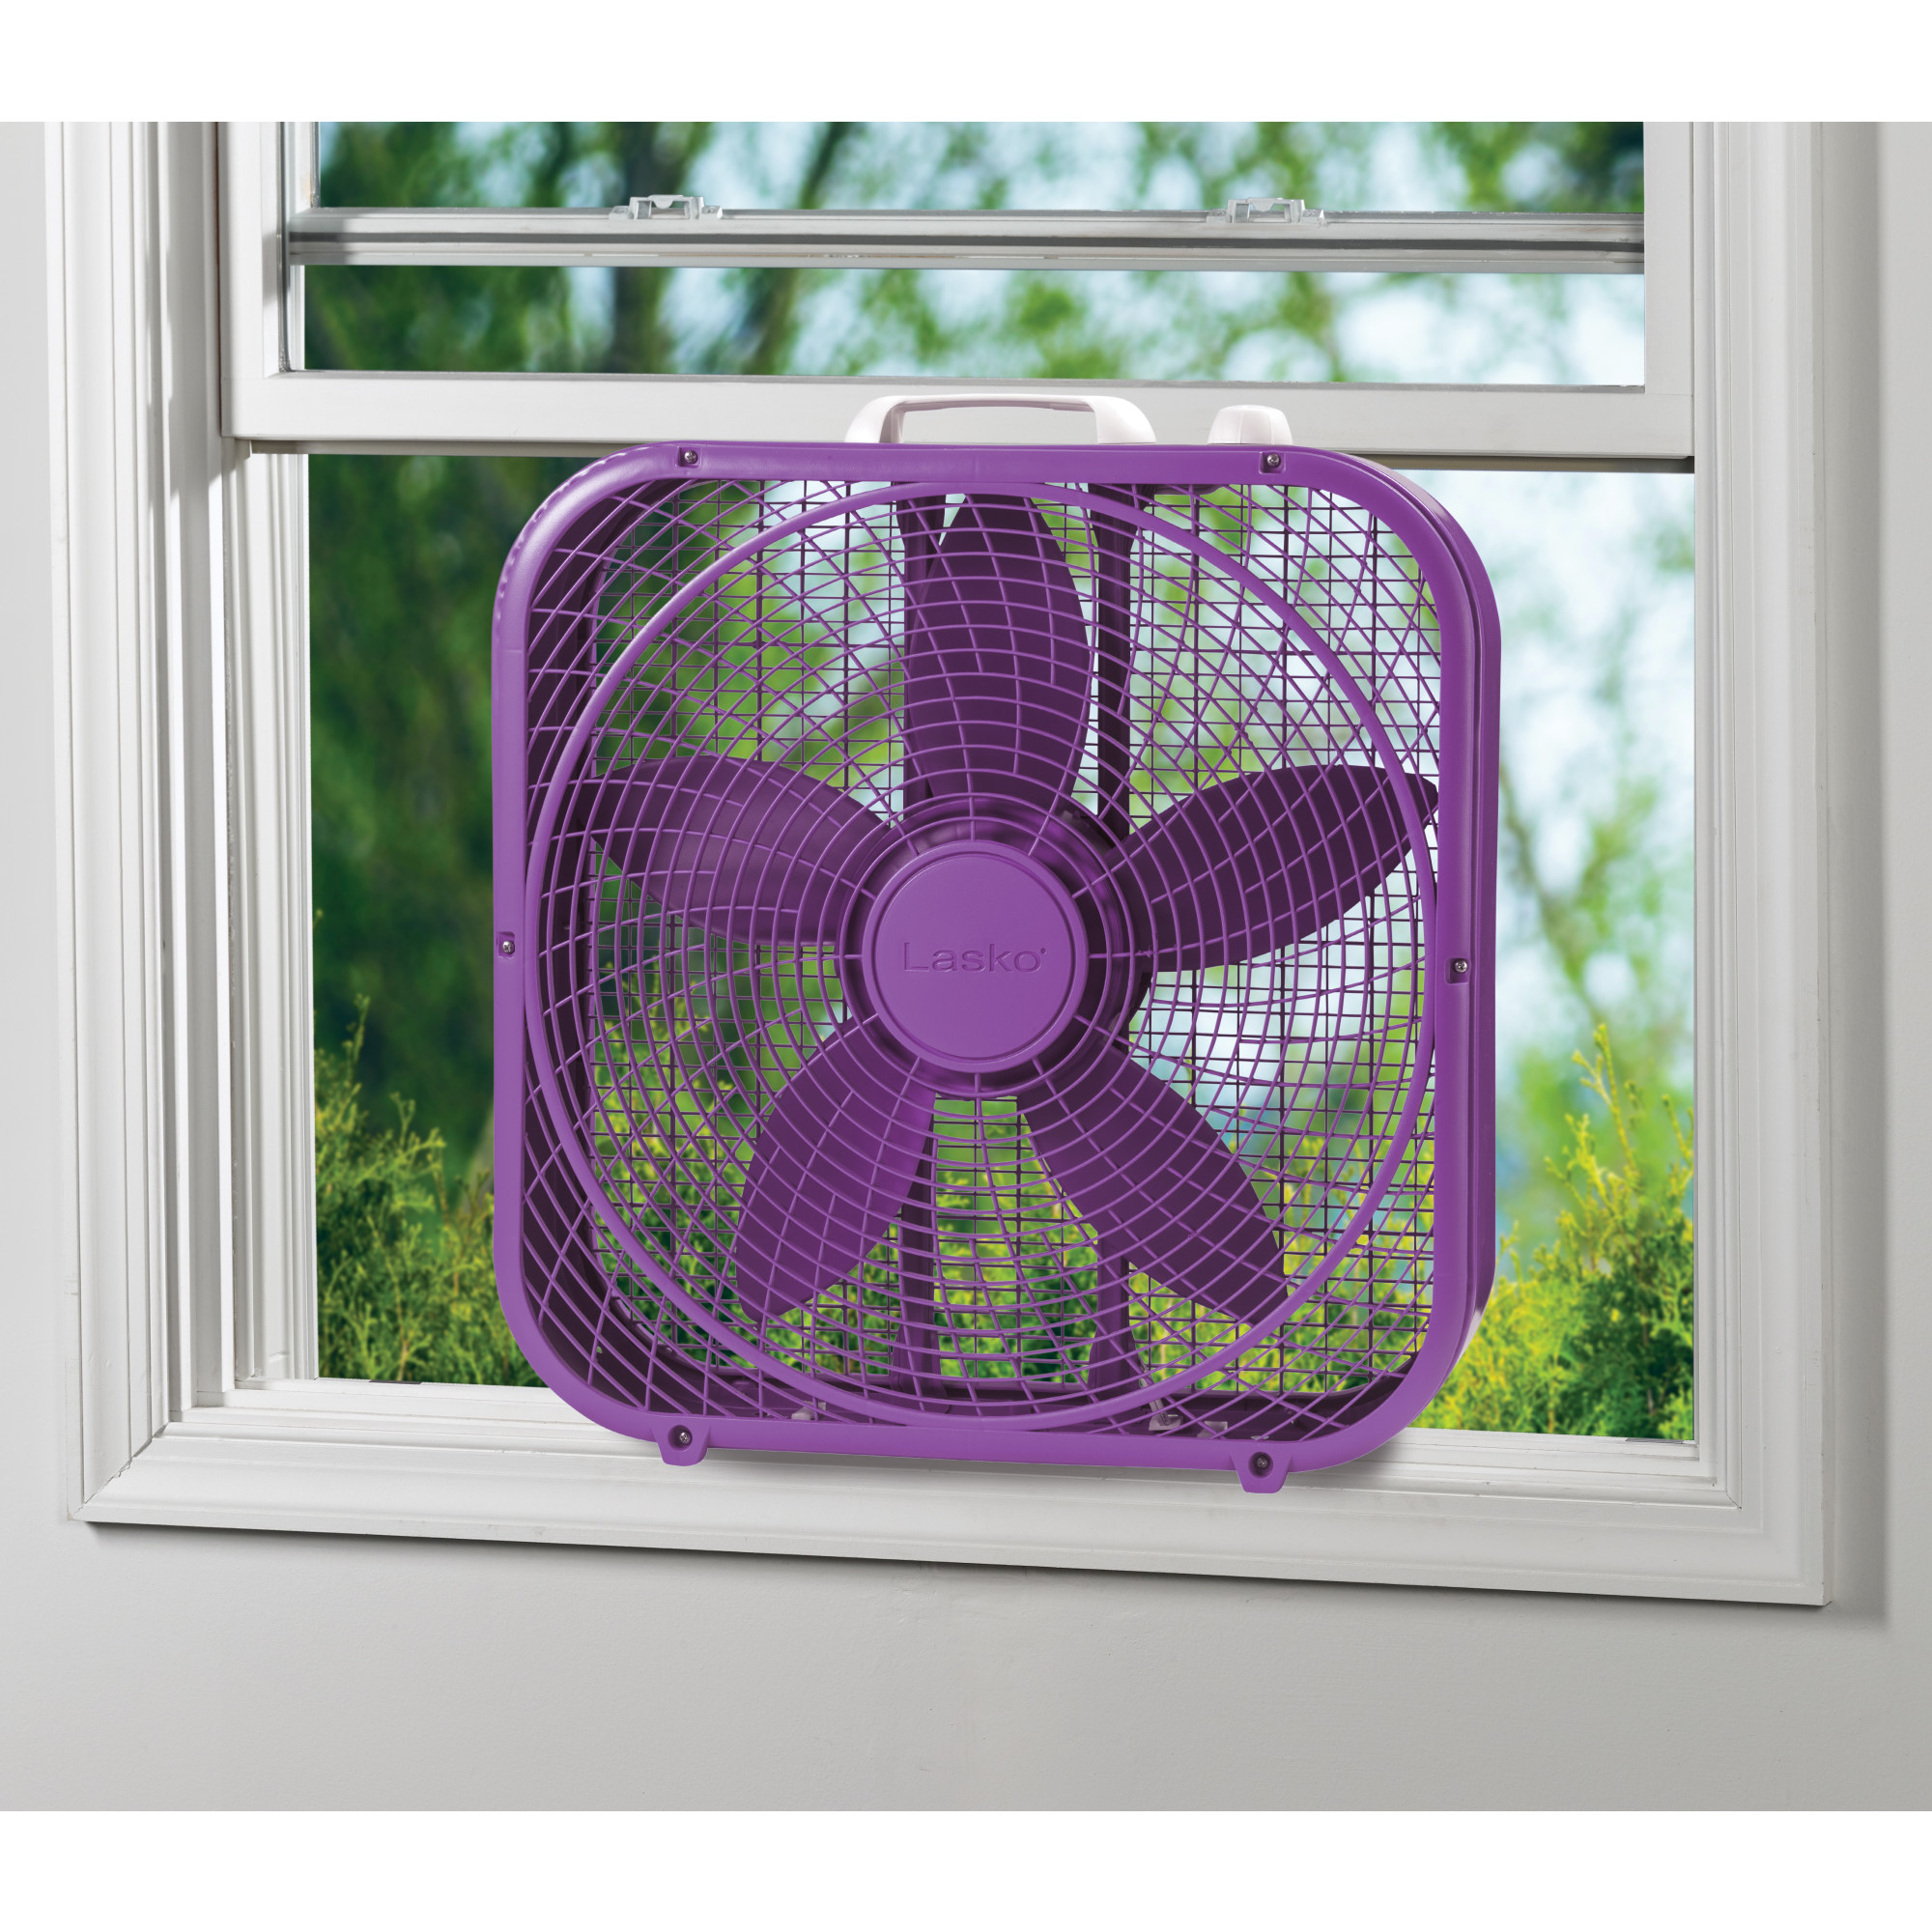 Lasko Cool Colors 20" Energy Efficient Box Fan, 3 Speeds, 22.5" H, Purple, B20309, New - image 4 of 5